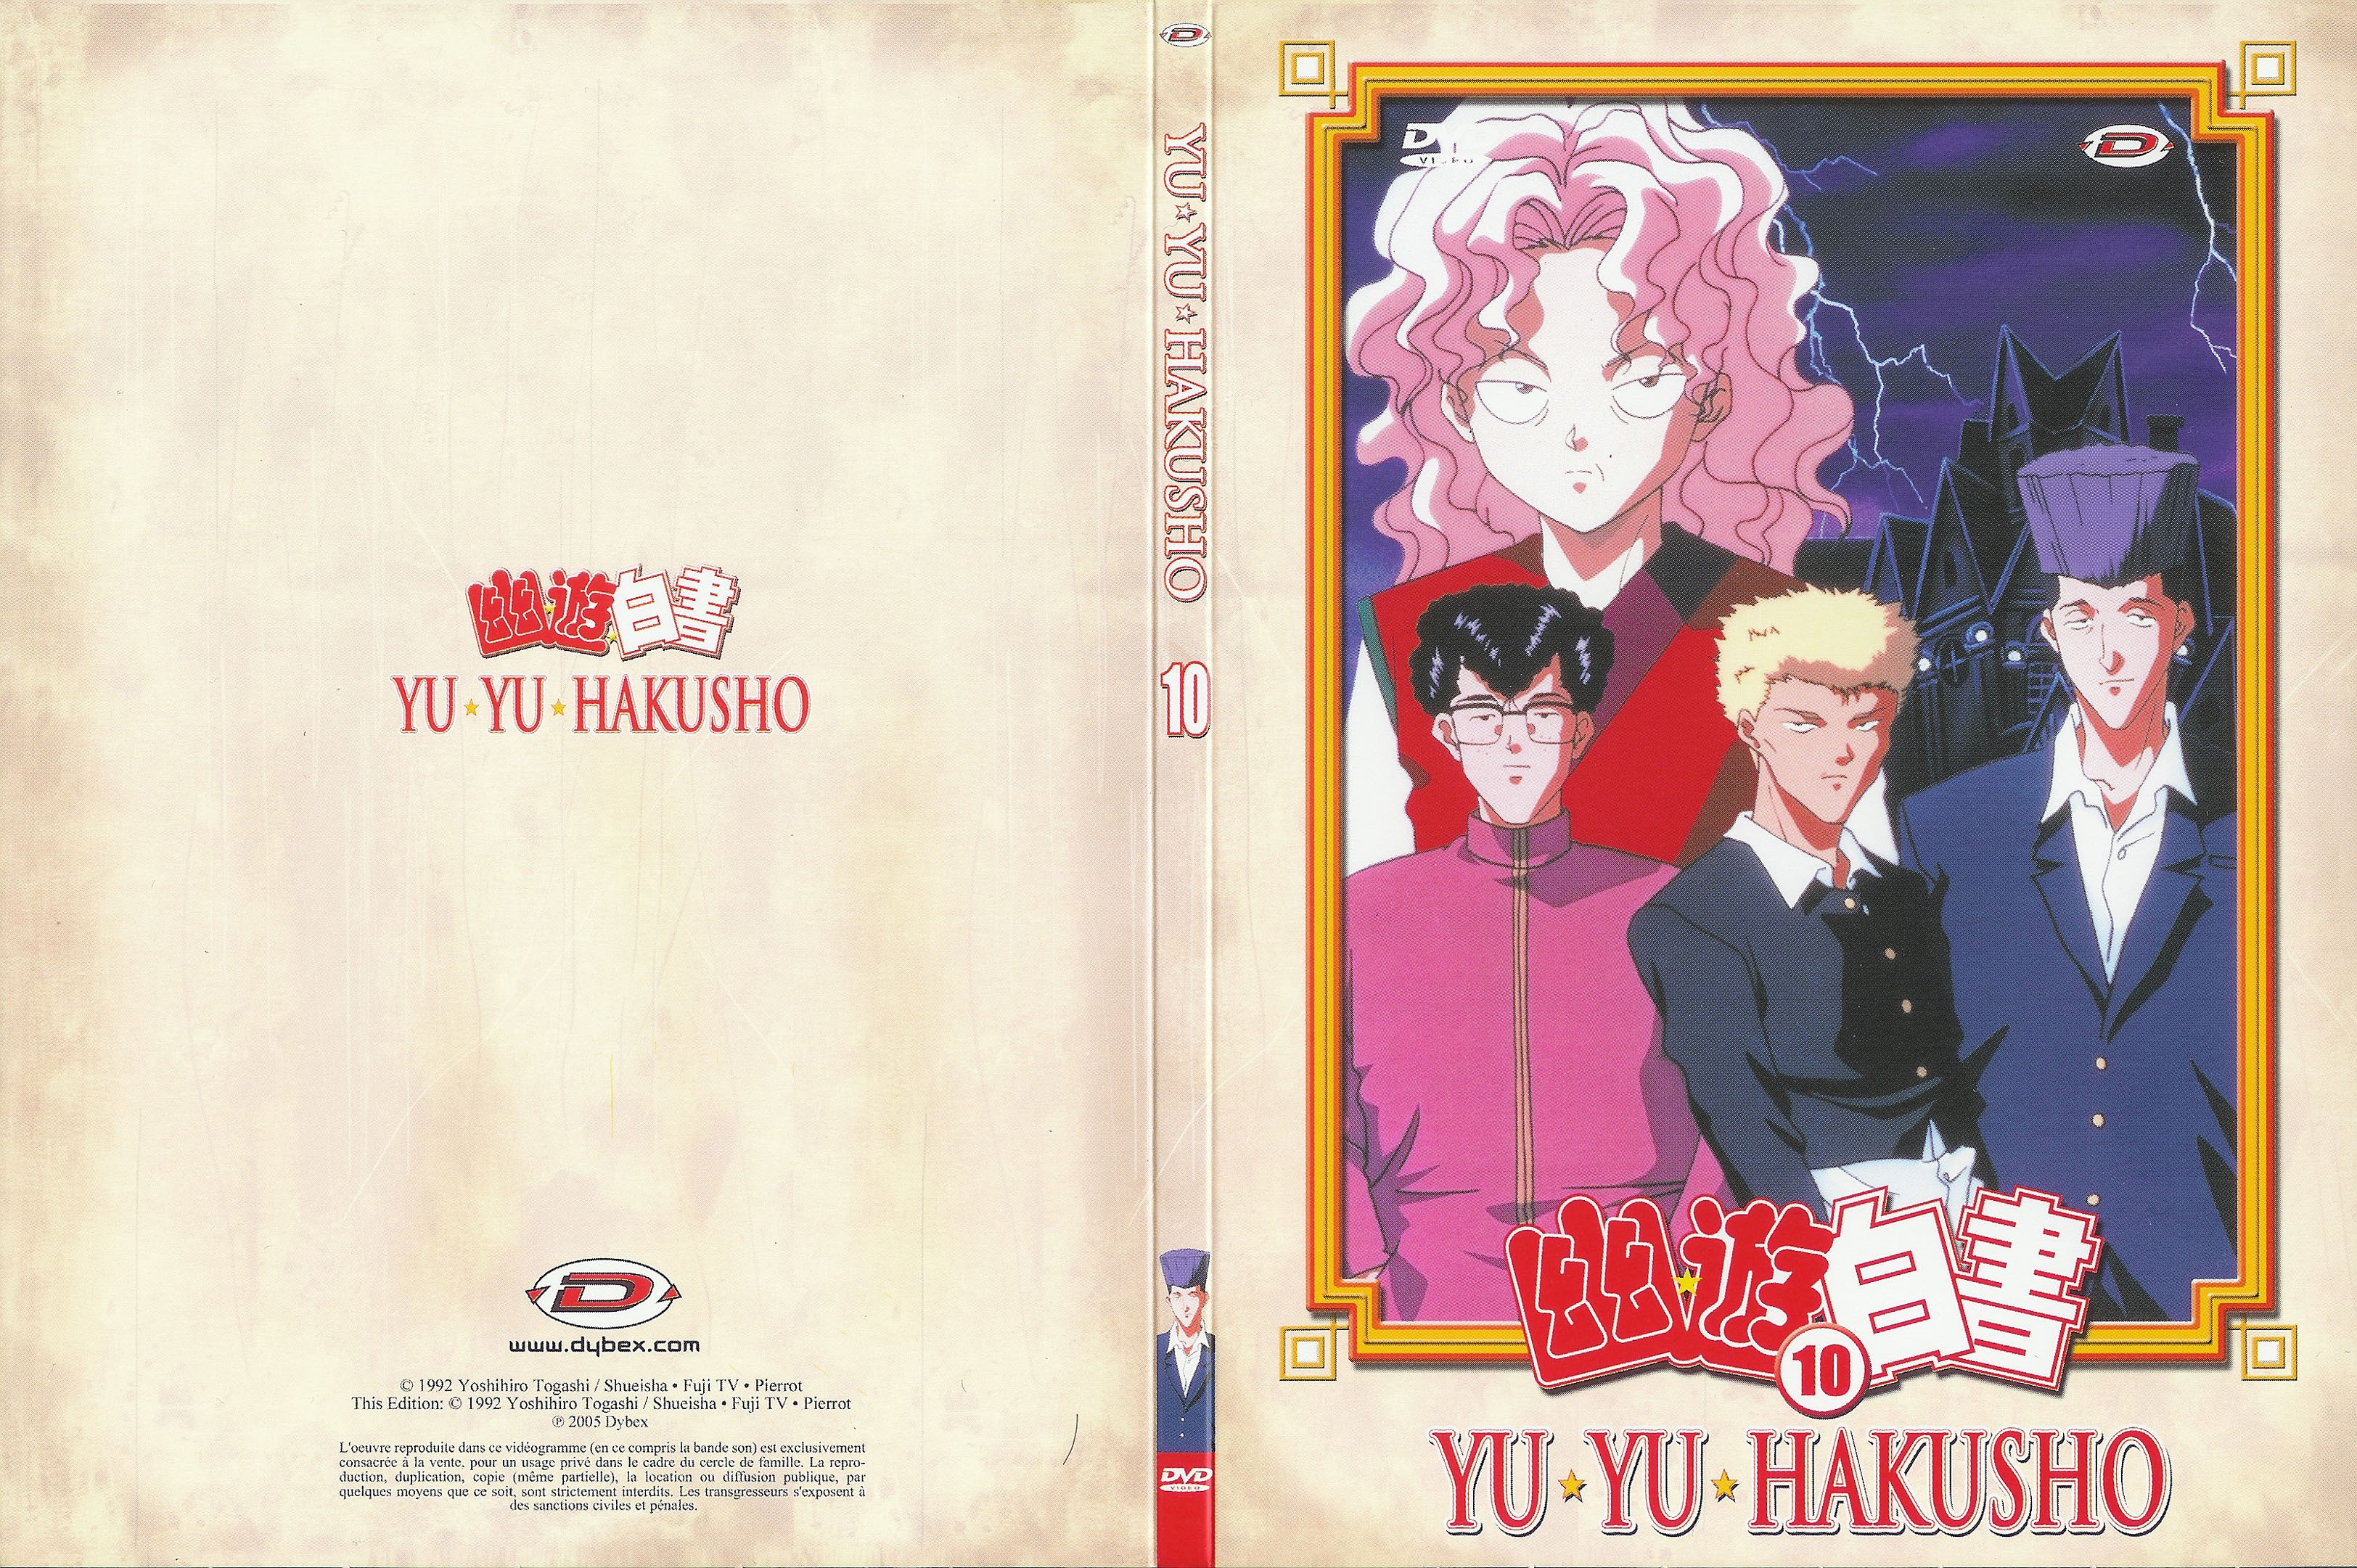 Jaquette DVD Yu yu hakusho vol 10